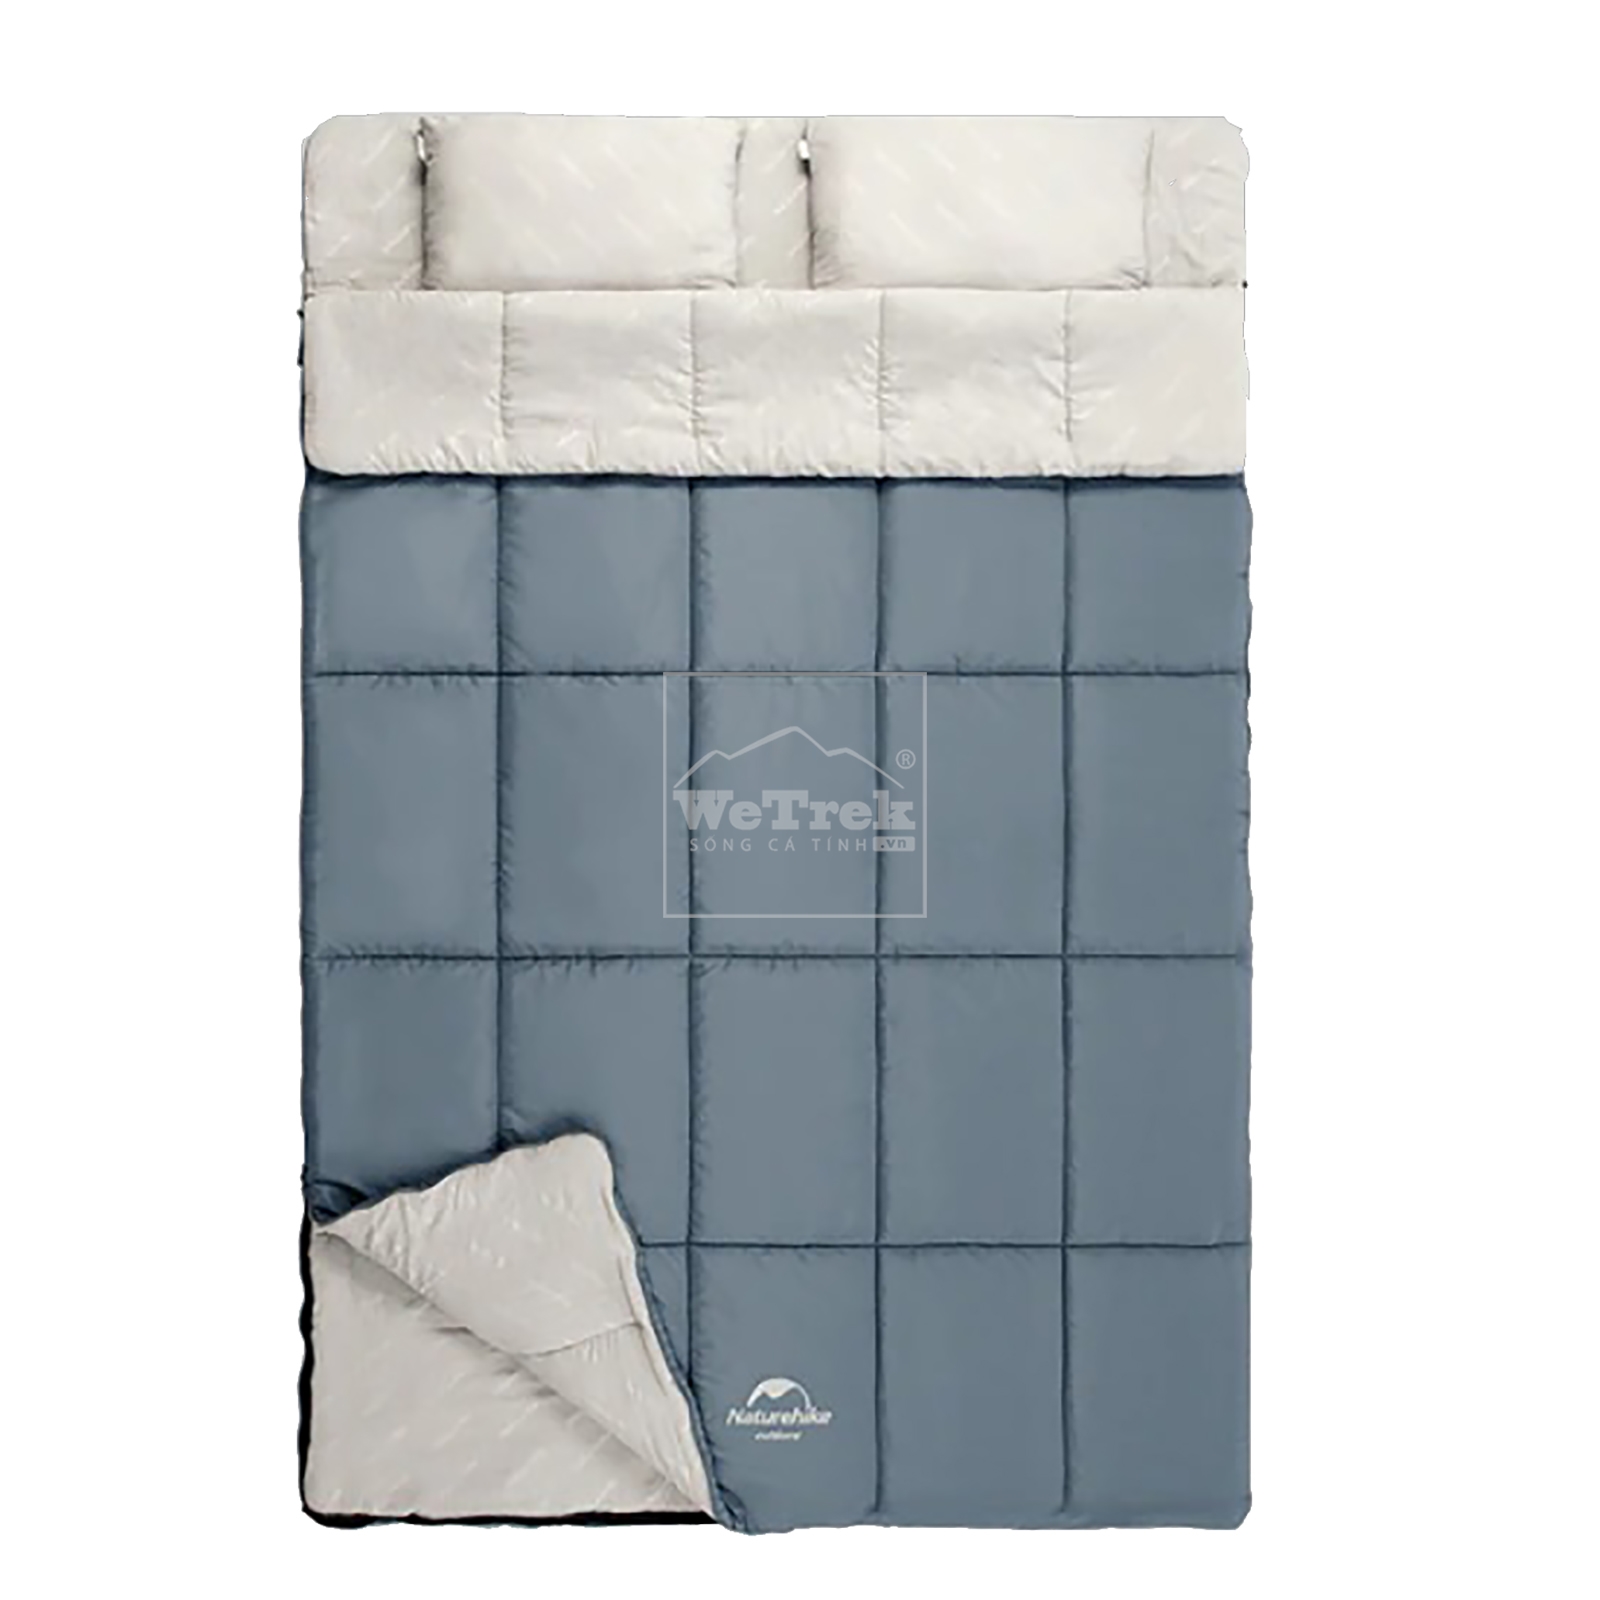 Ultralight Sleeping Bag | Buy Hiking Sleeping Bag Online | Alton